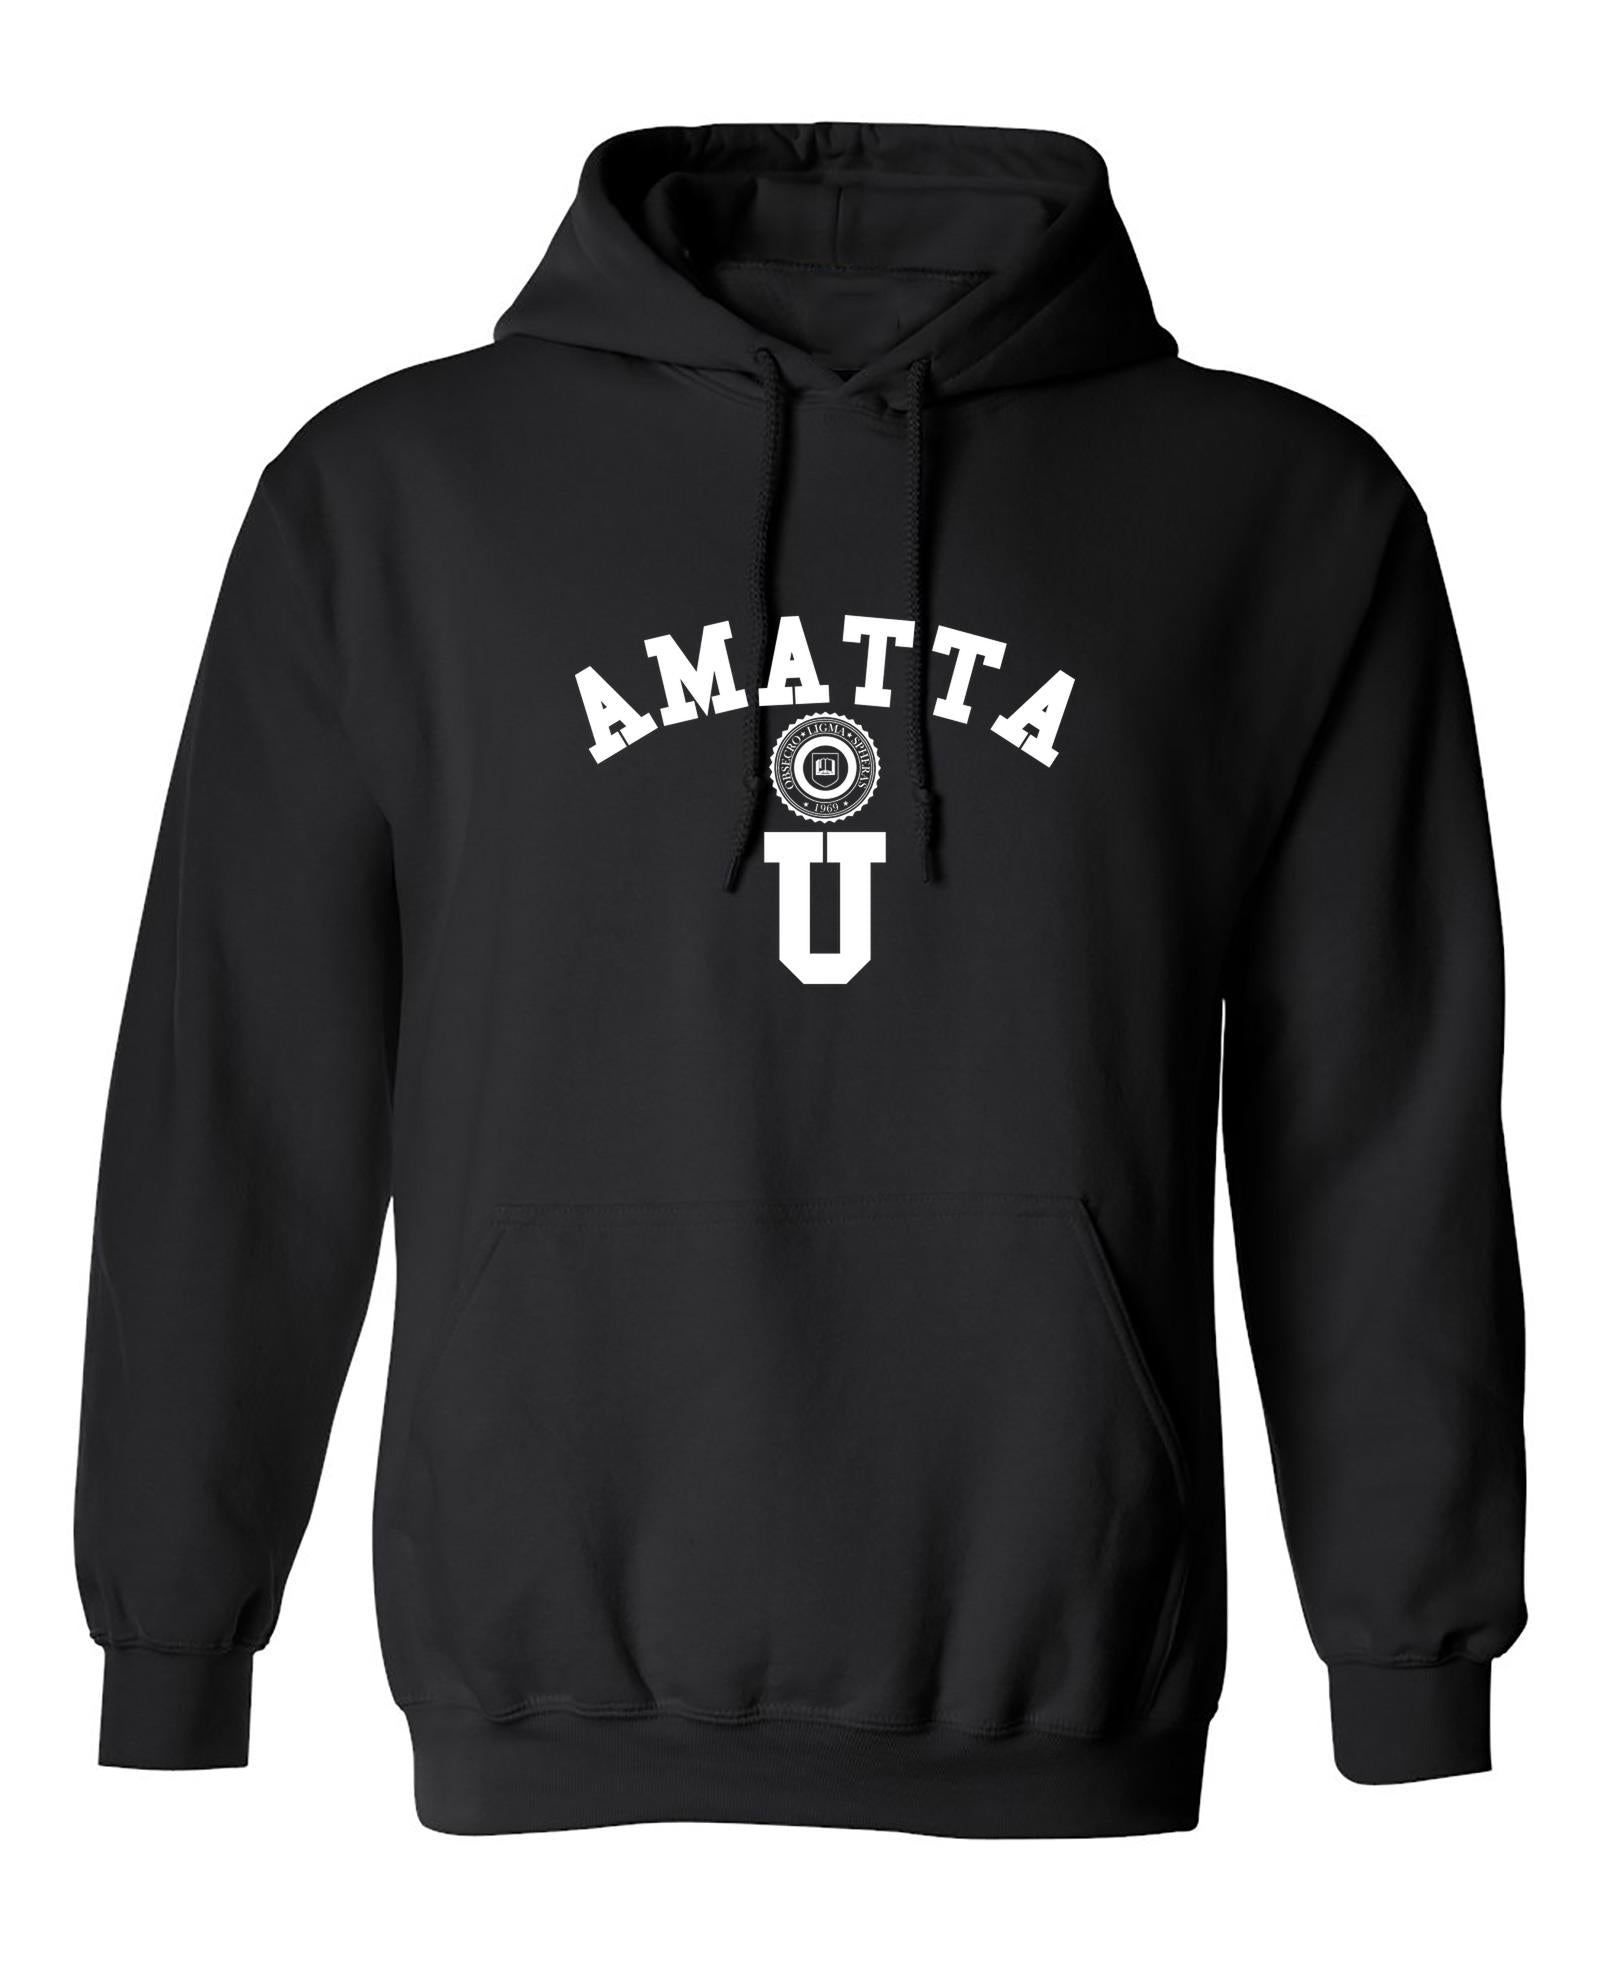 Funny T-Shirts design "AMATTA U"